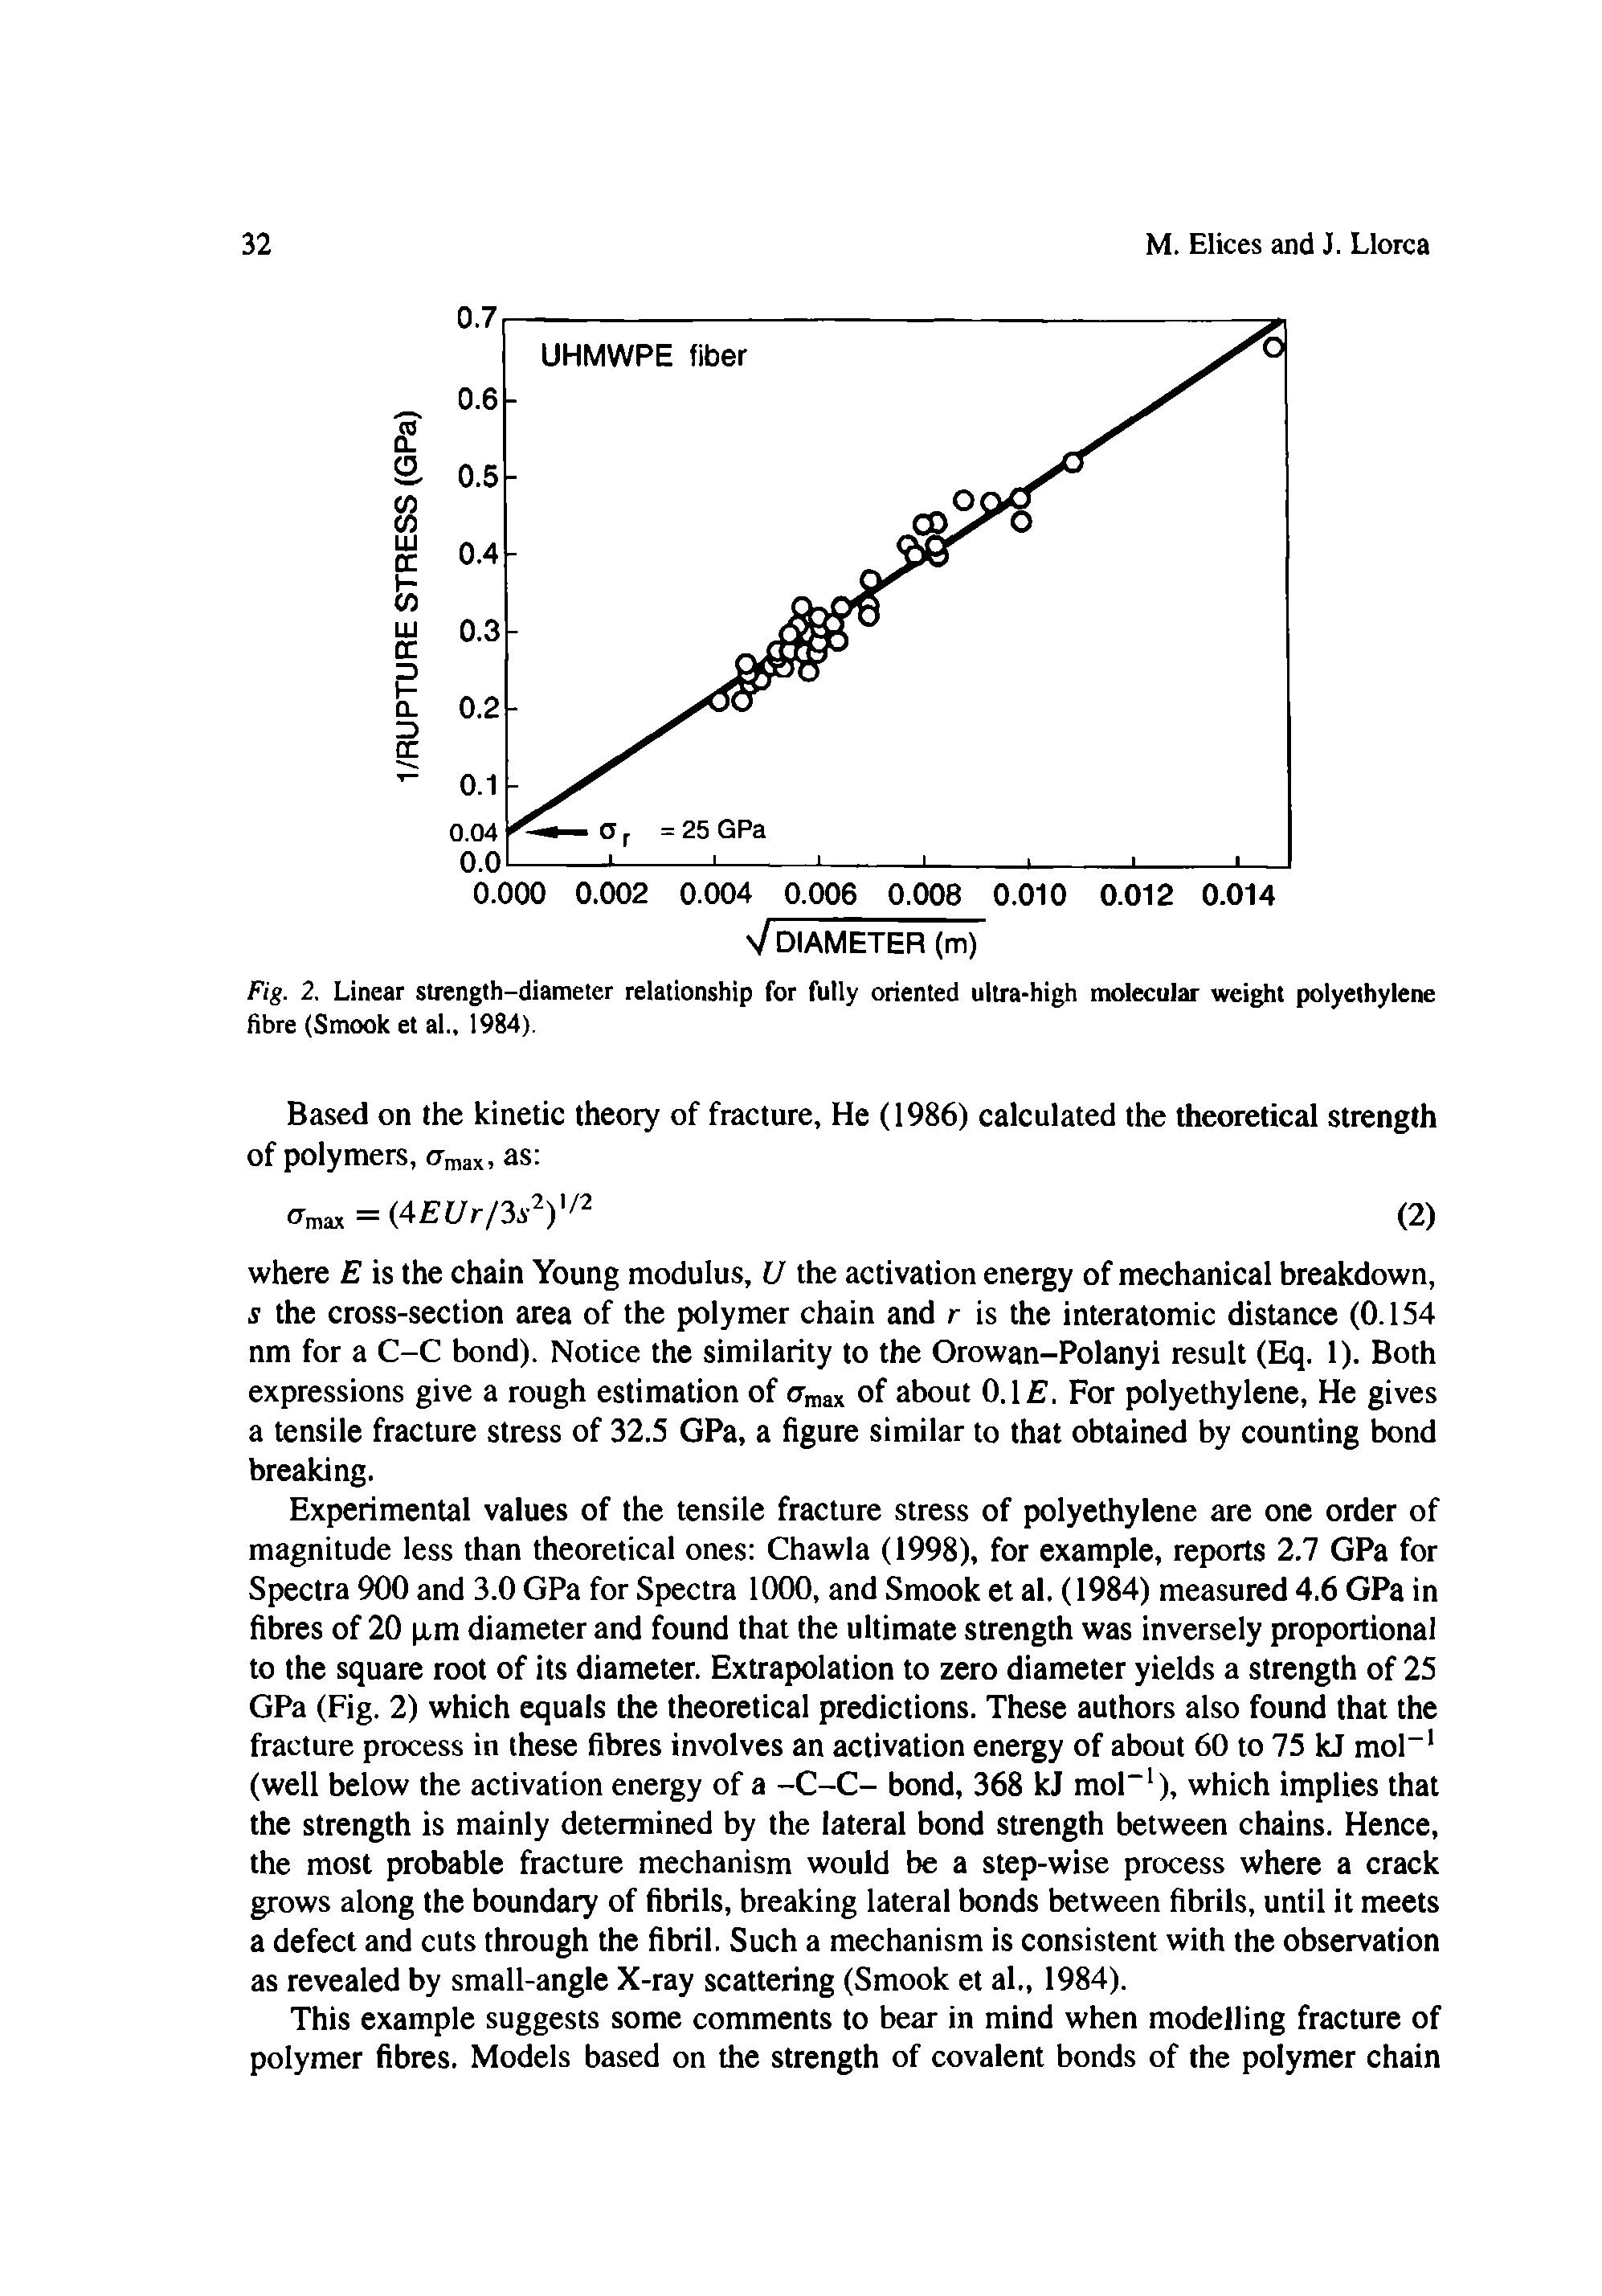 Fig. 2. Linear strength-diameter relationship for fully oriented ultra-high molecular weight polyethylene fibre (Smook et al., 1984),...